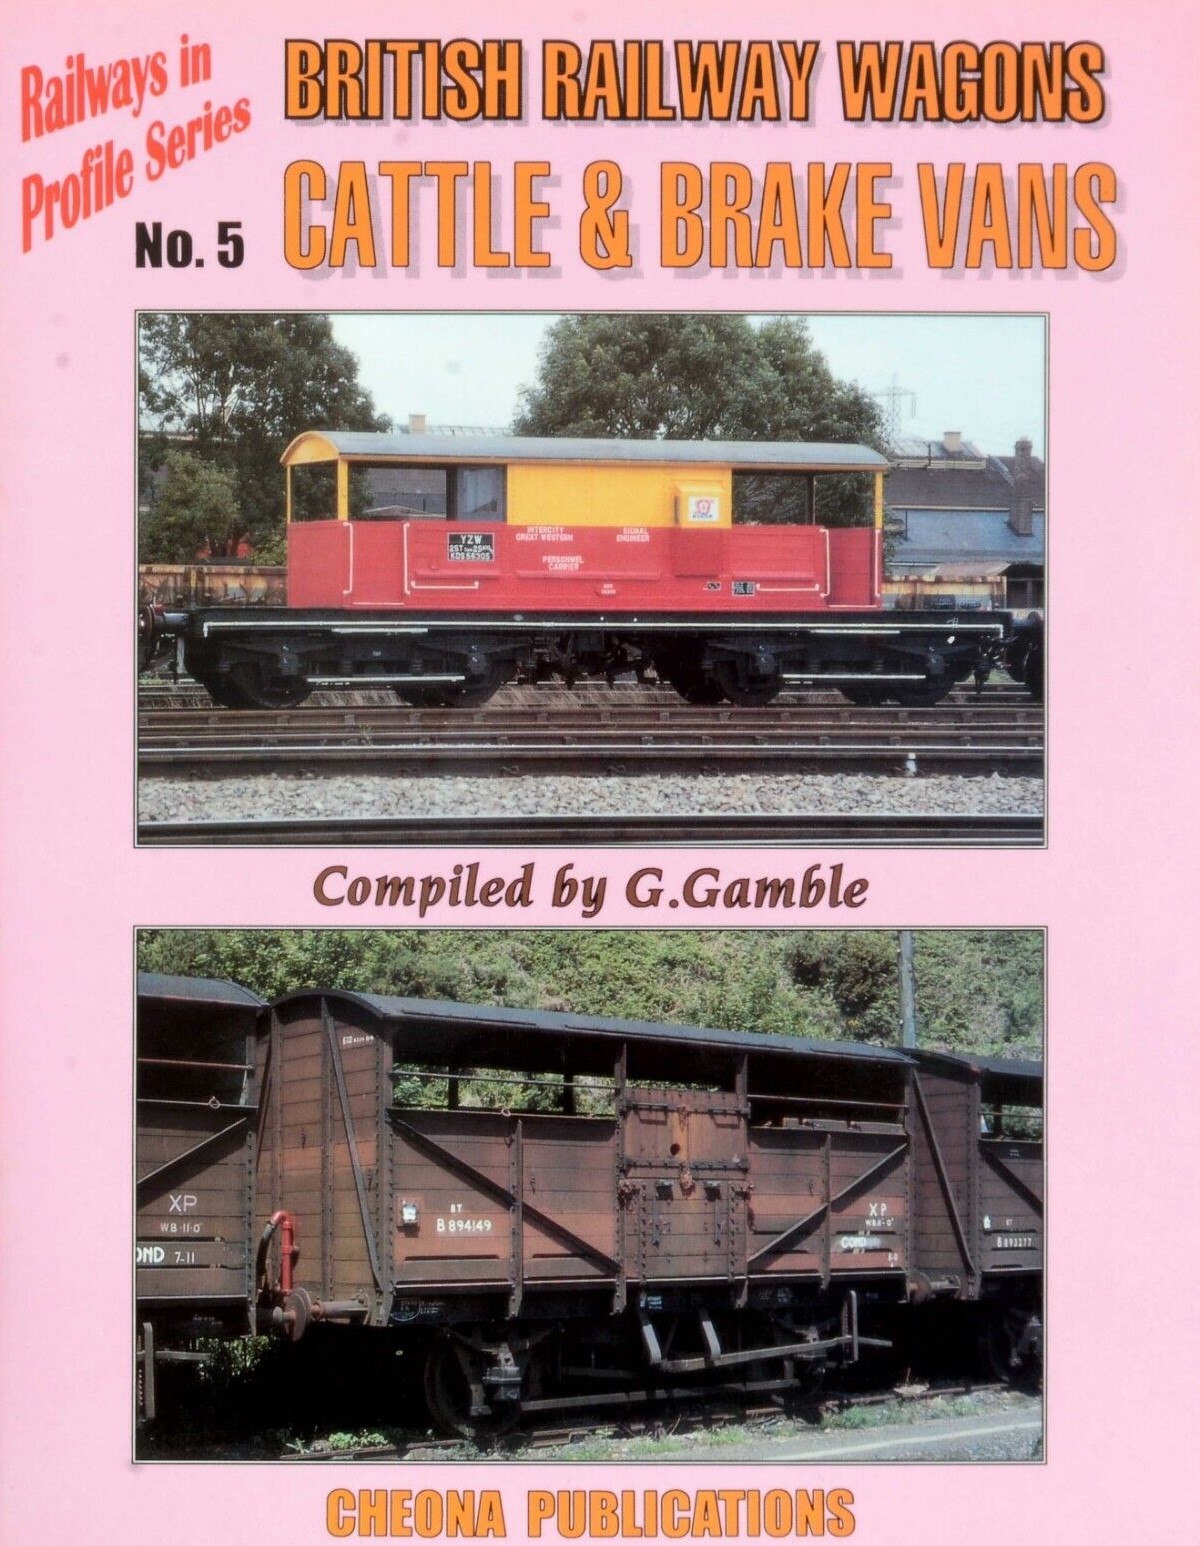 Railways in Profile Series No. 5 British Railway Wagons: Cattle & Brake Vans